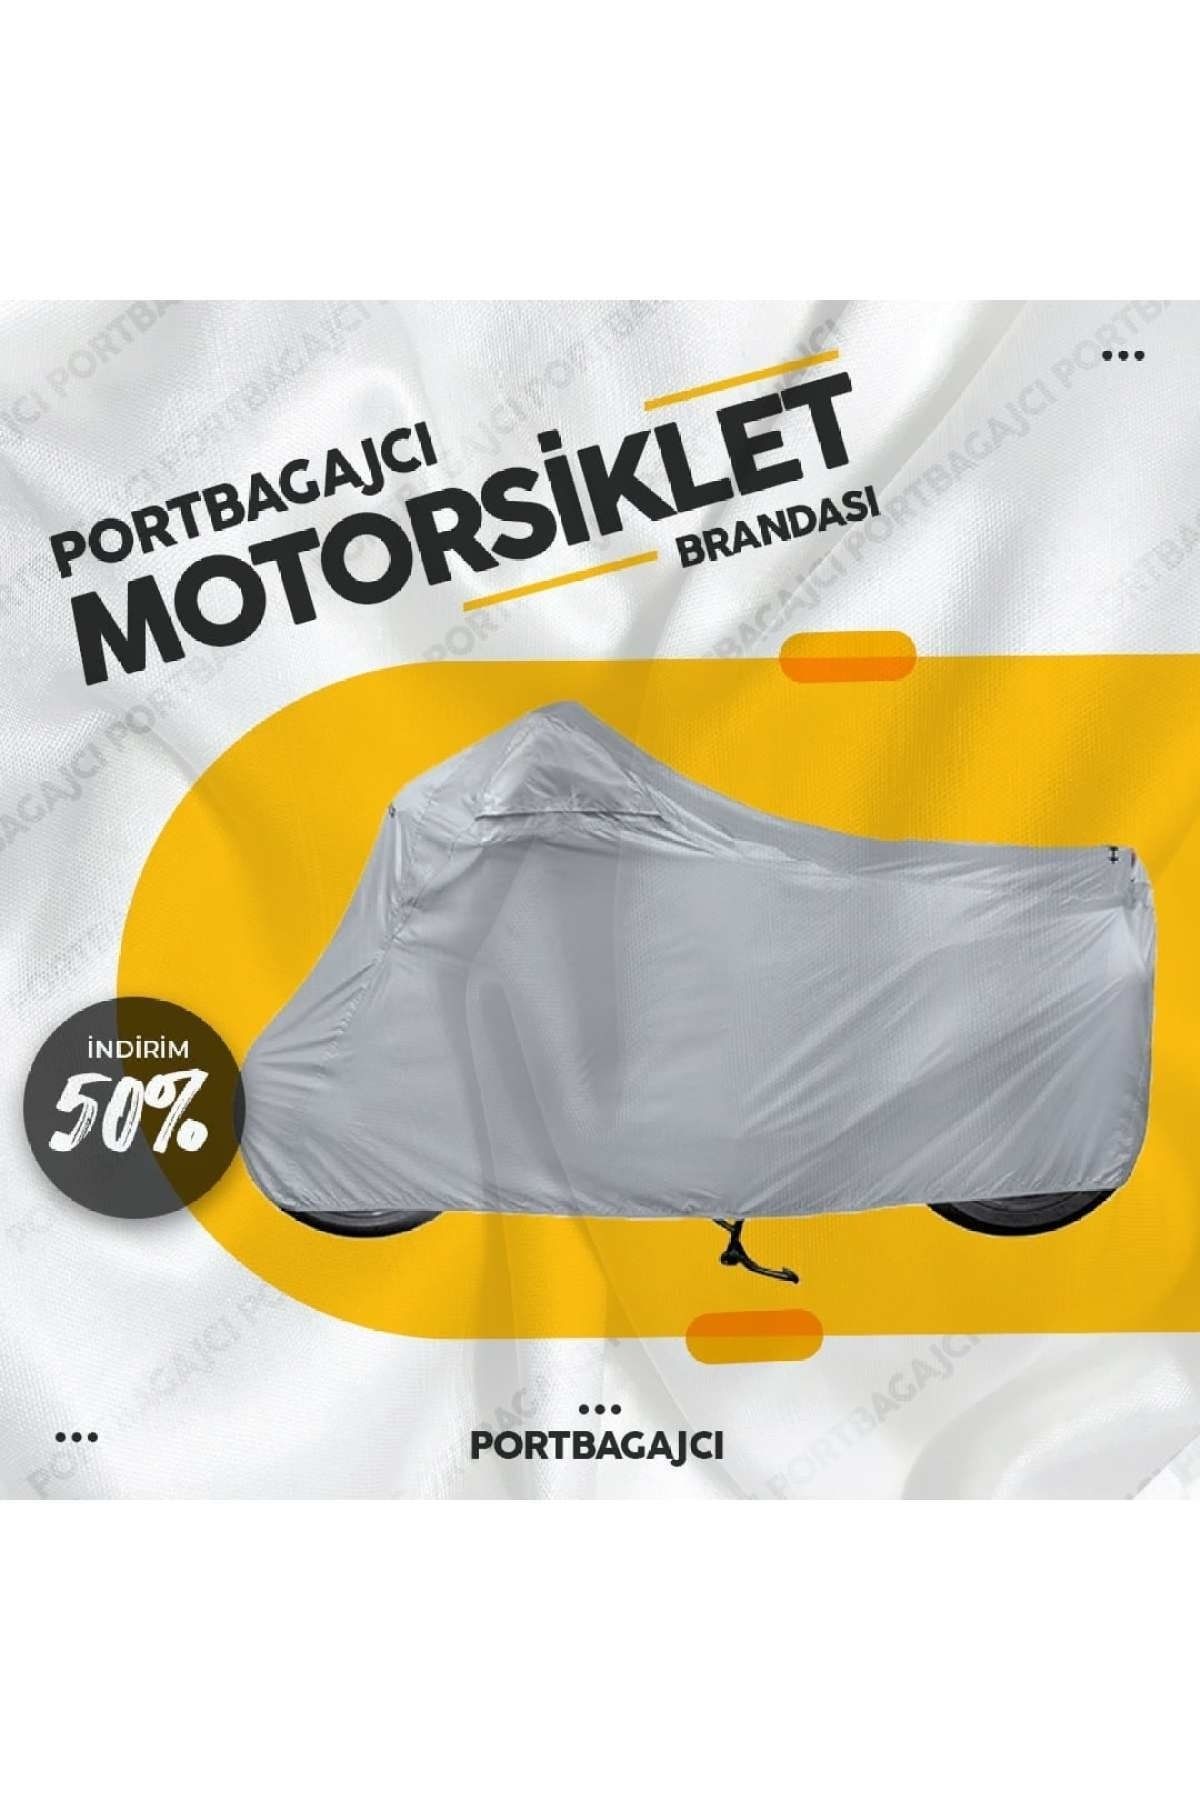 PORTBAGAJCI Mz Sportstar 251 Motor Brandası Miflonlu